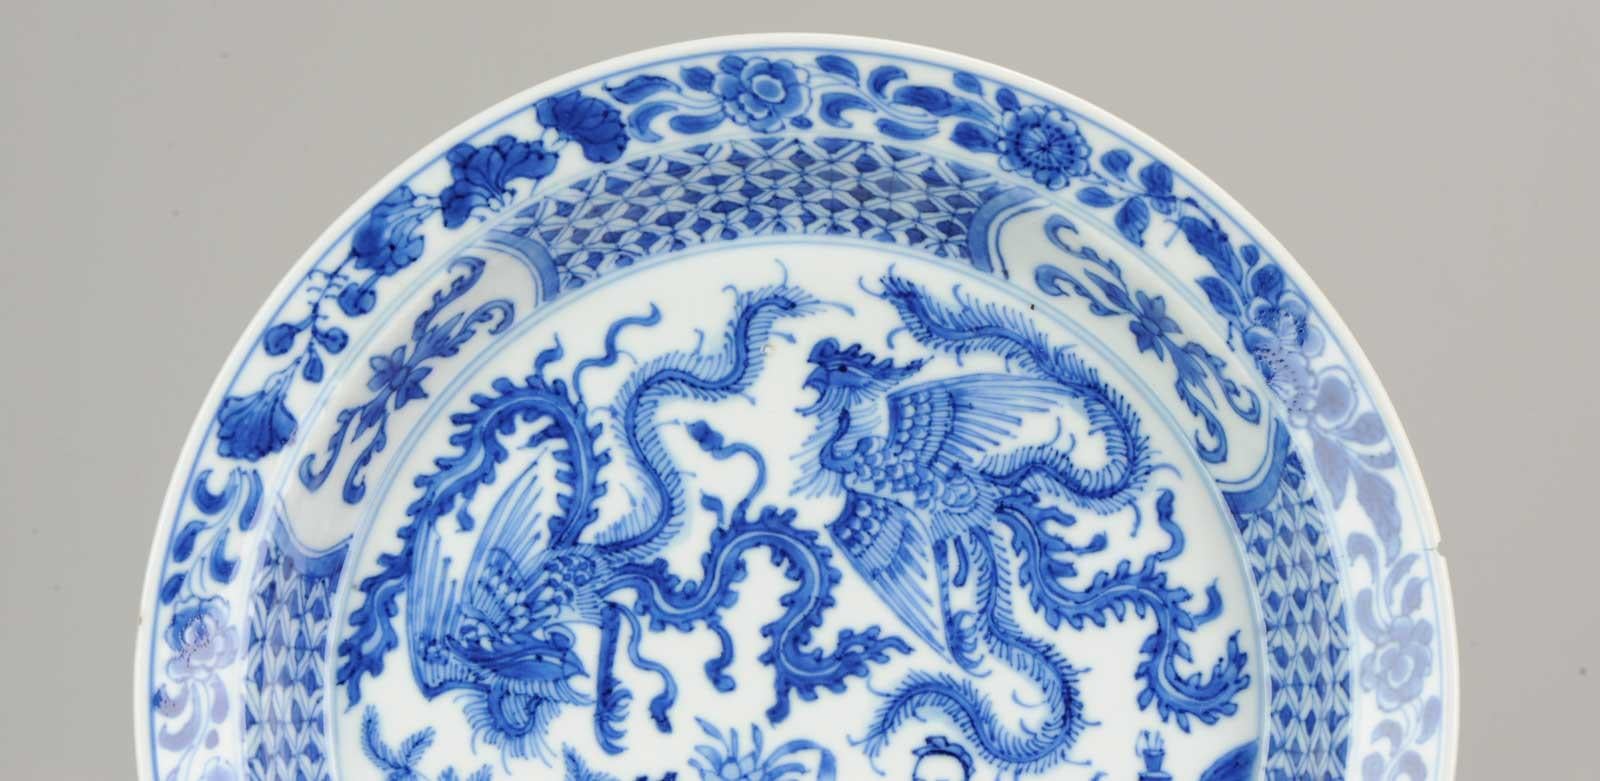 Kangxi-Porzellanteller mit Phönix-Figuren:: Marke Lingzhi Fungus:: um 1700 2